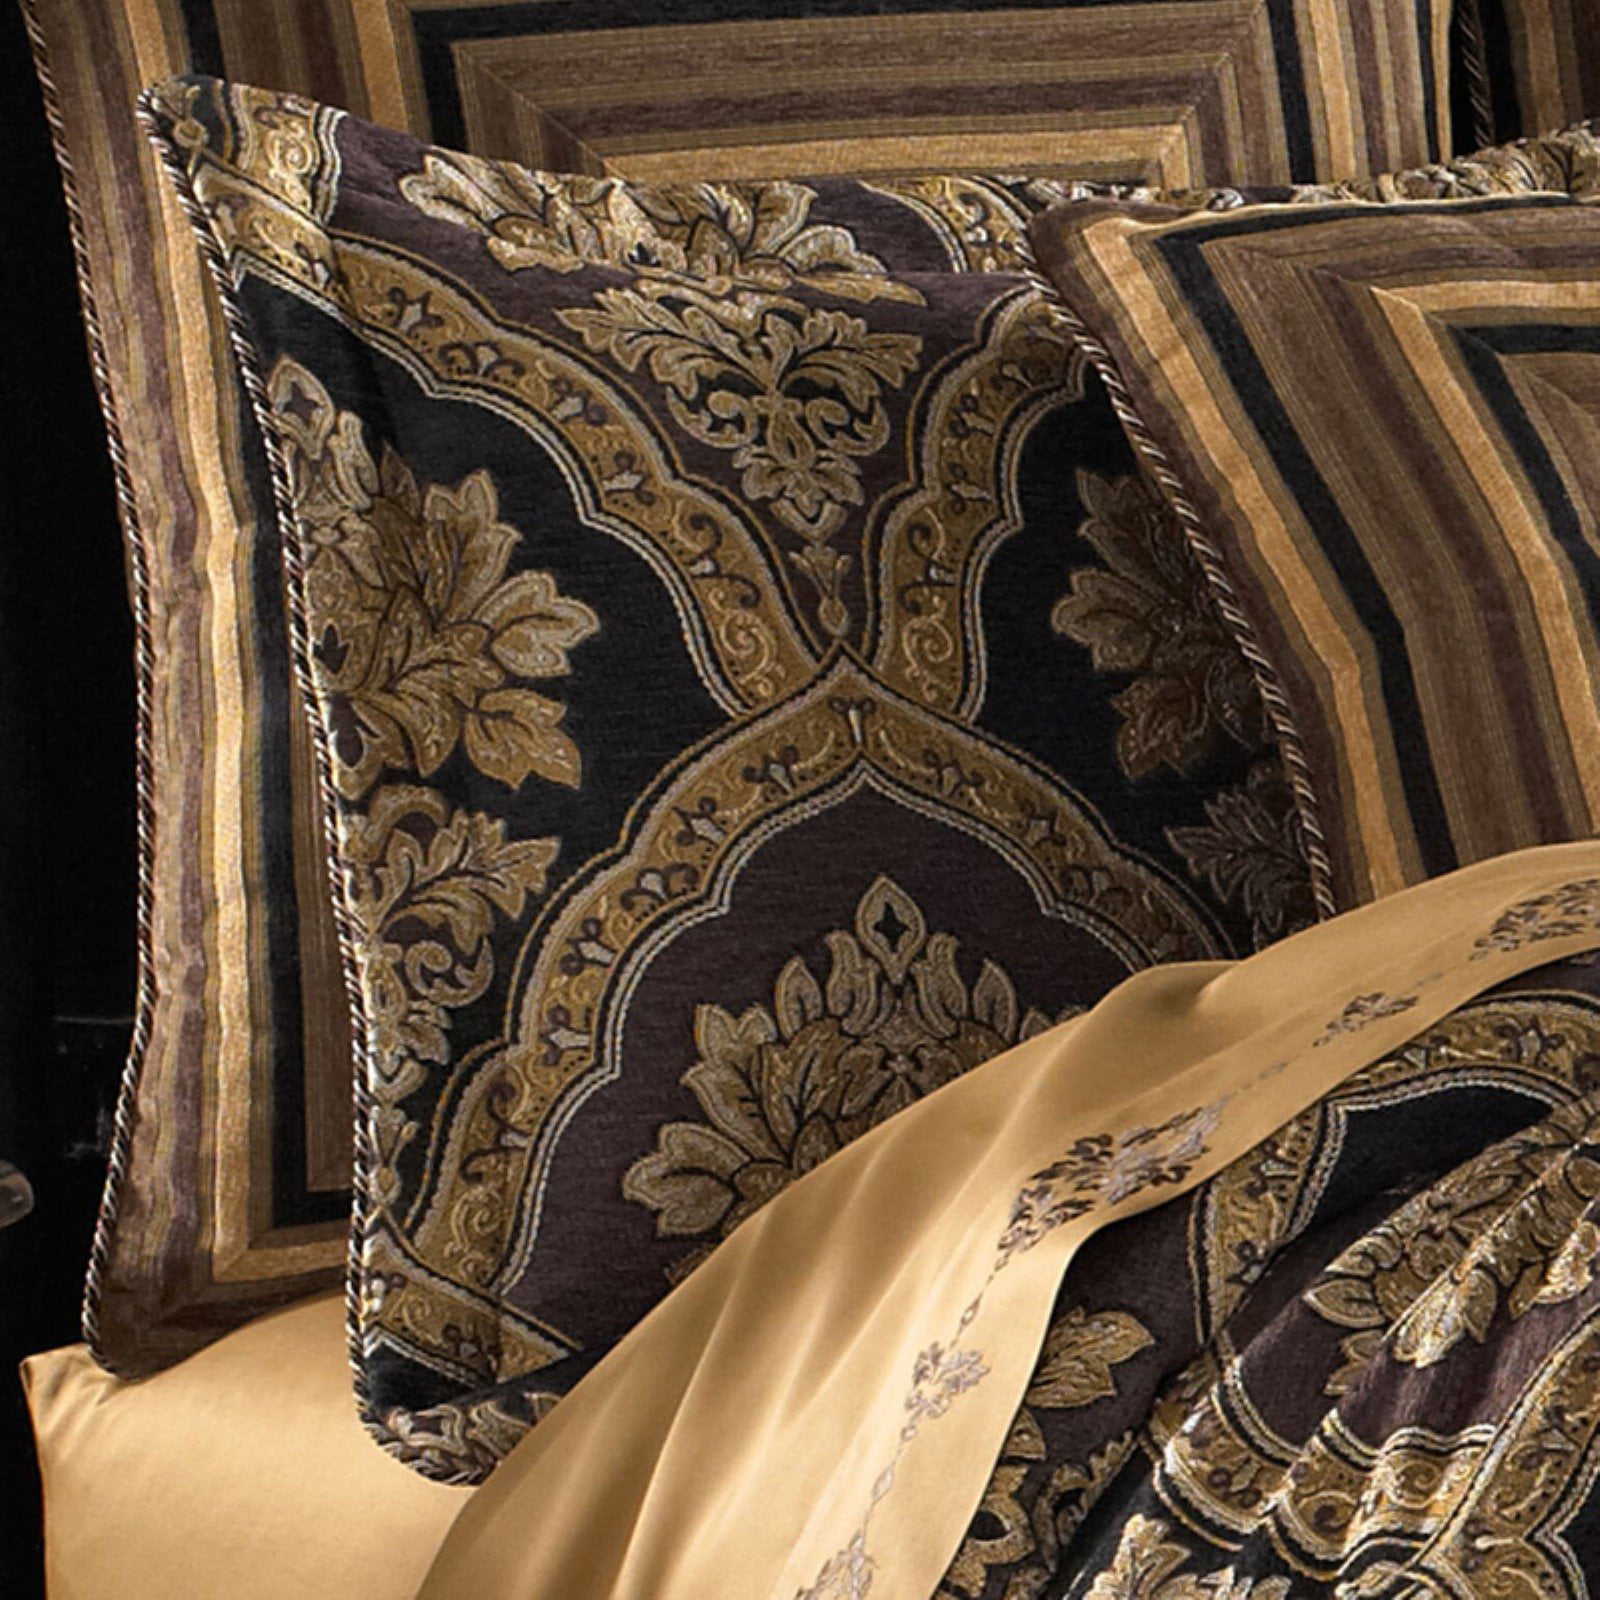 Windham Black and Charcoal Damask Quatrefoil Comforter Bedding by